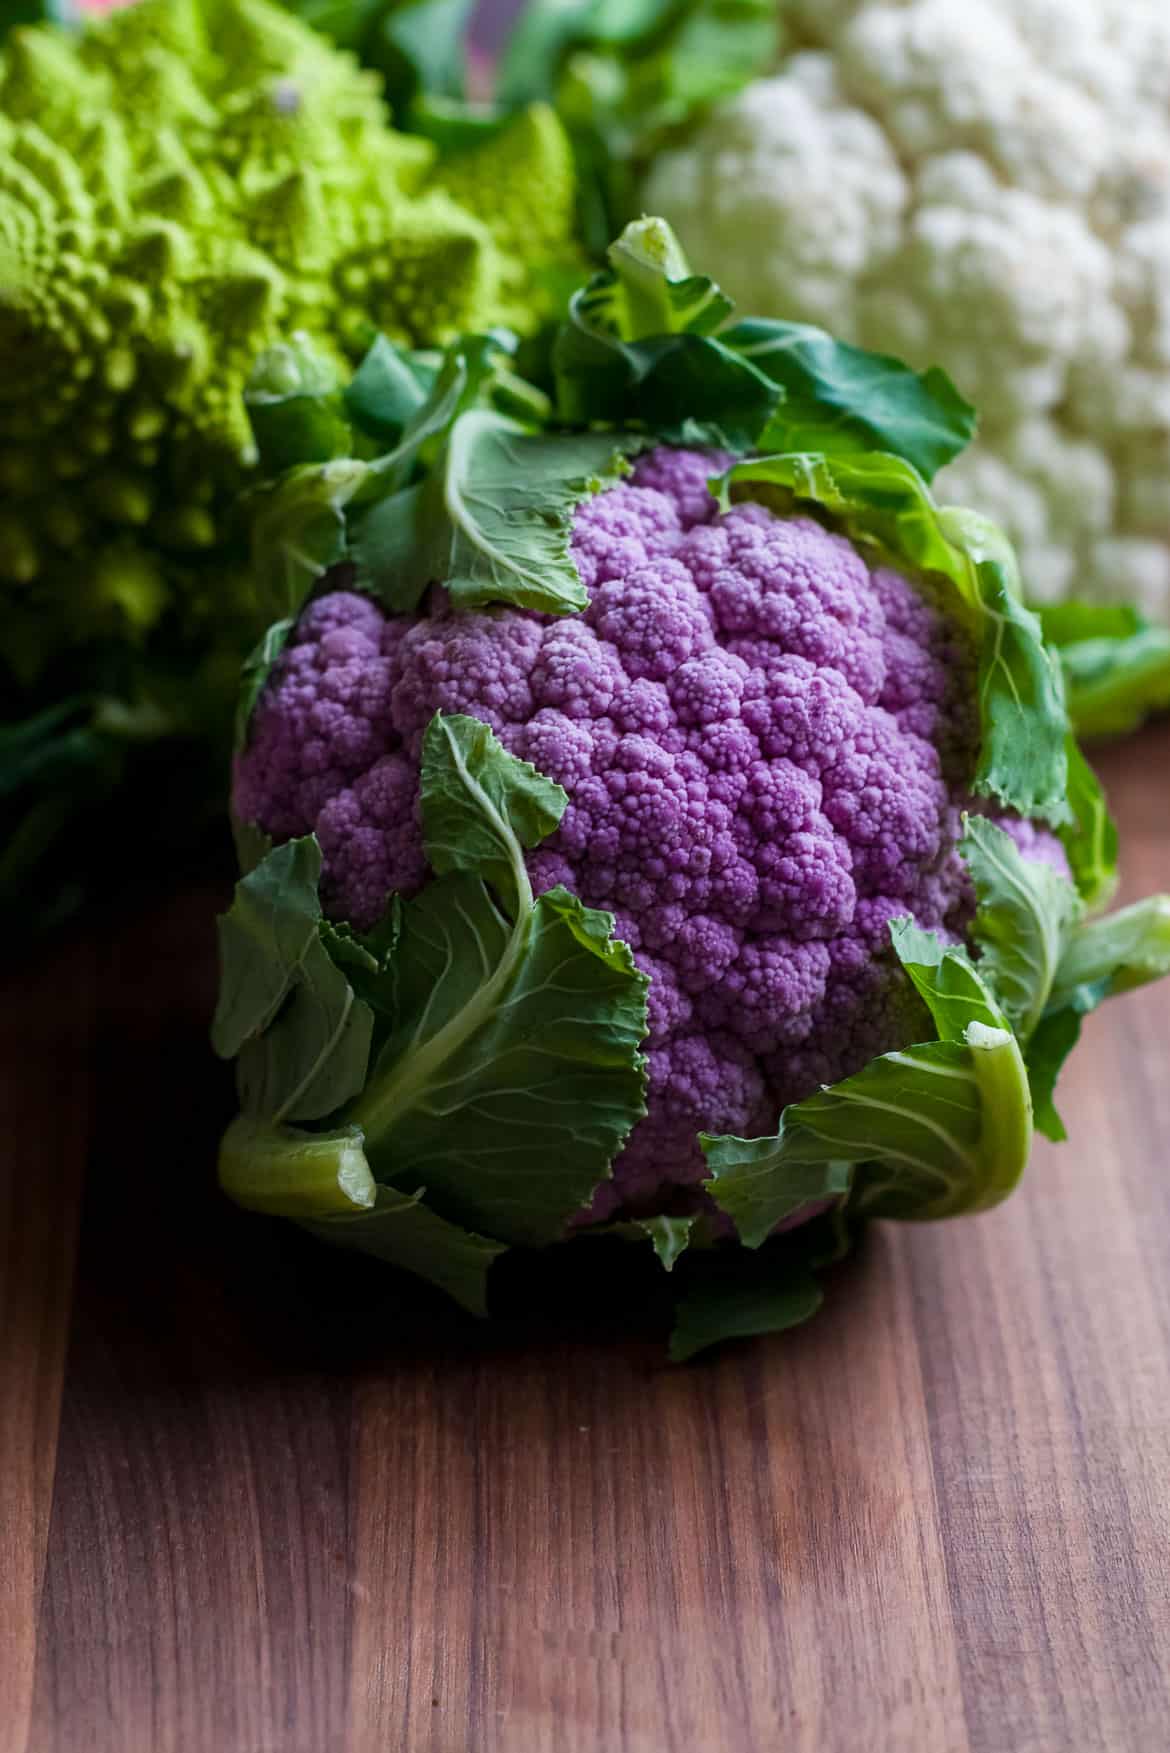 A purple cauliflower.